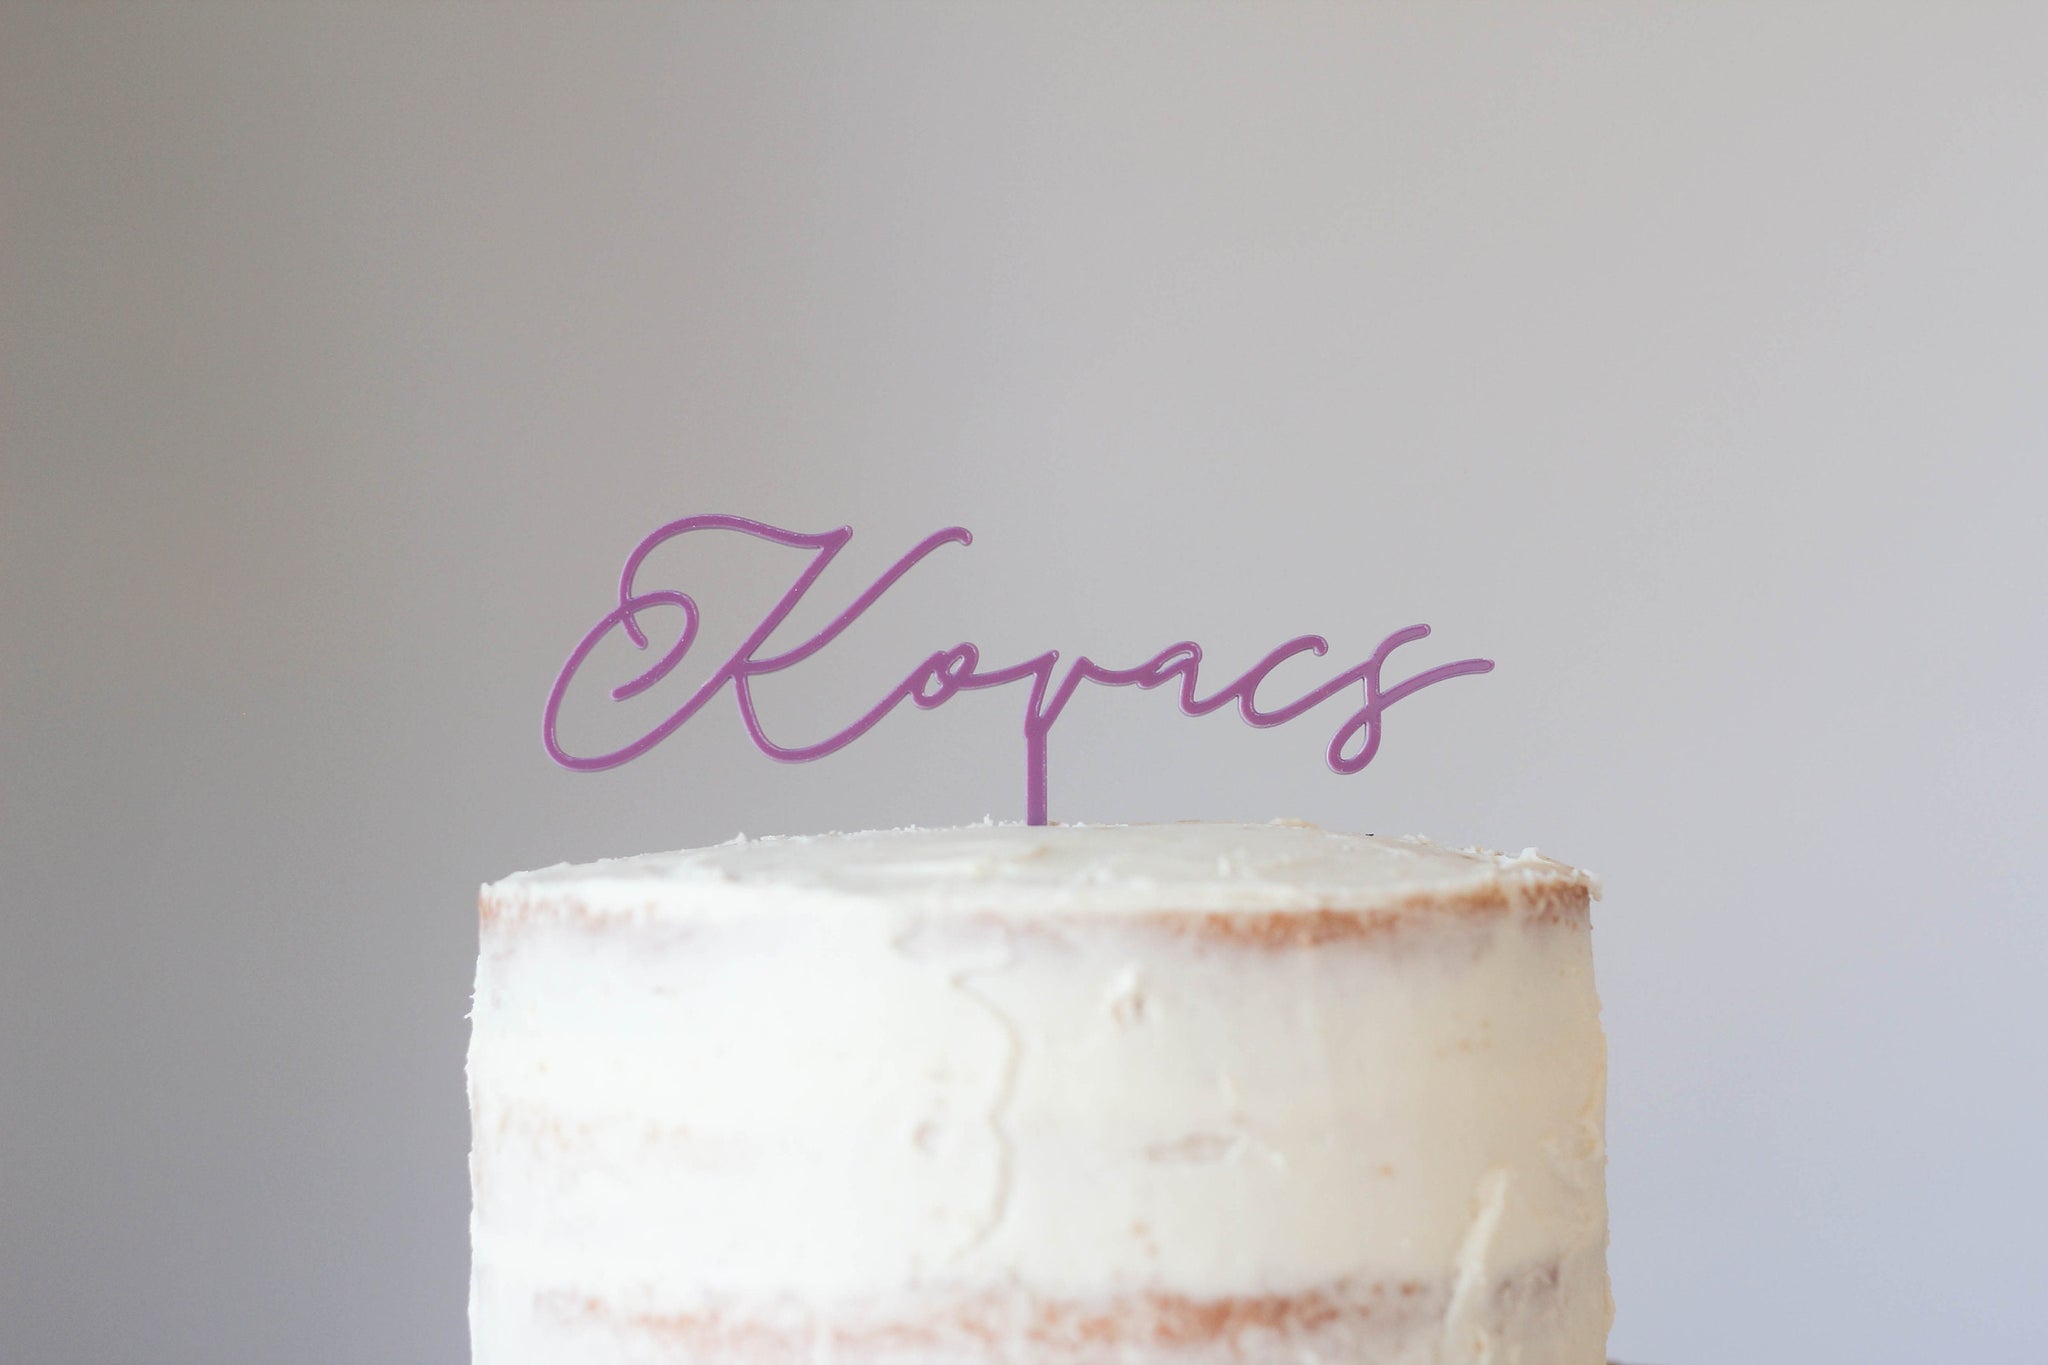 Surname Wedding Cake Topper - A Minimal Wedding Cake Topper That Compliments Any Wedding Cake And Decor